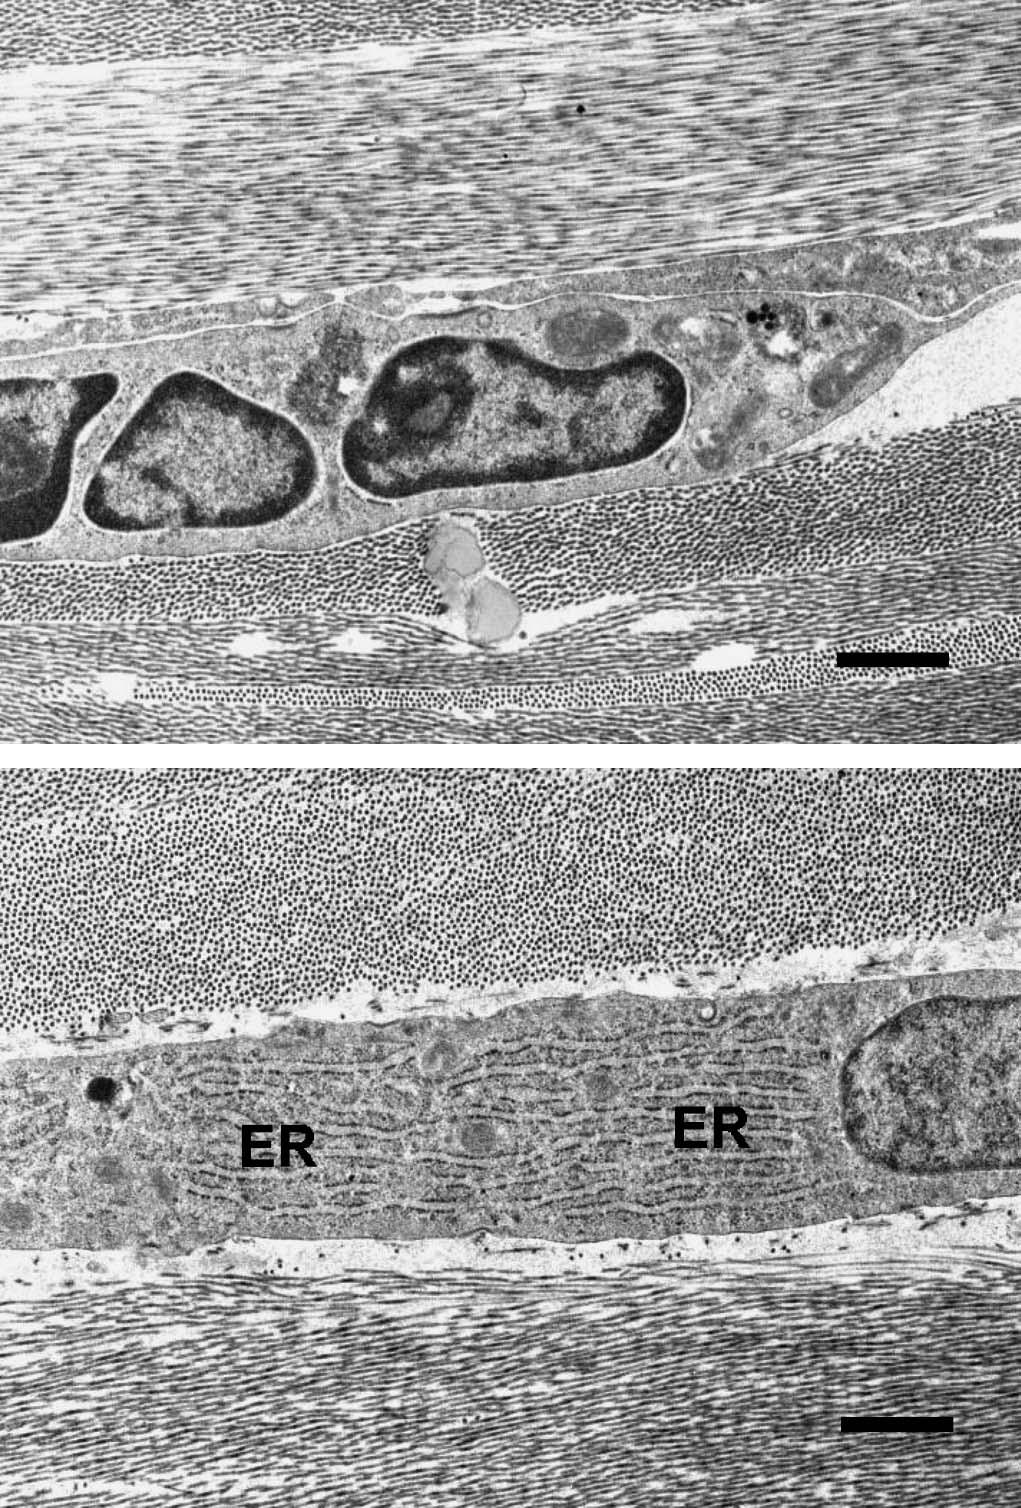 Gooi et al Cornea Volume 26, Number 7, August 2007 FIGURE 4. Transmission electron photomicrograph of keratocytes found in the operated cornea.